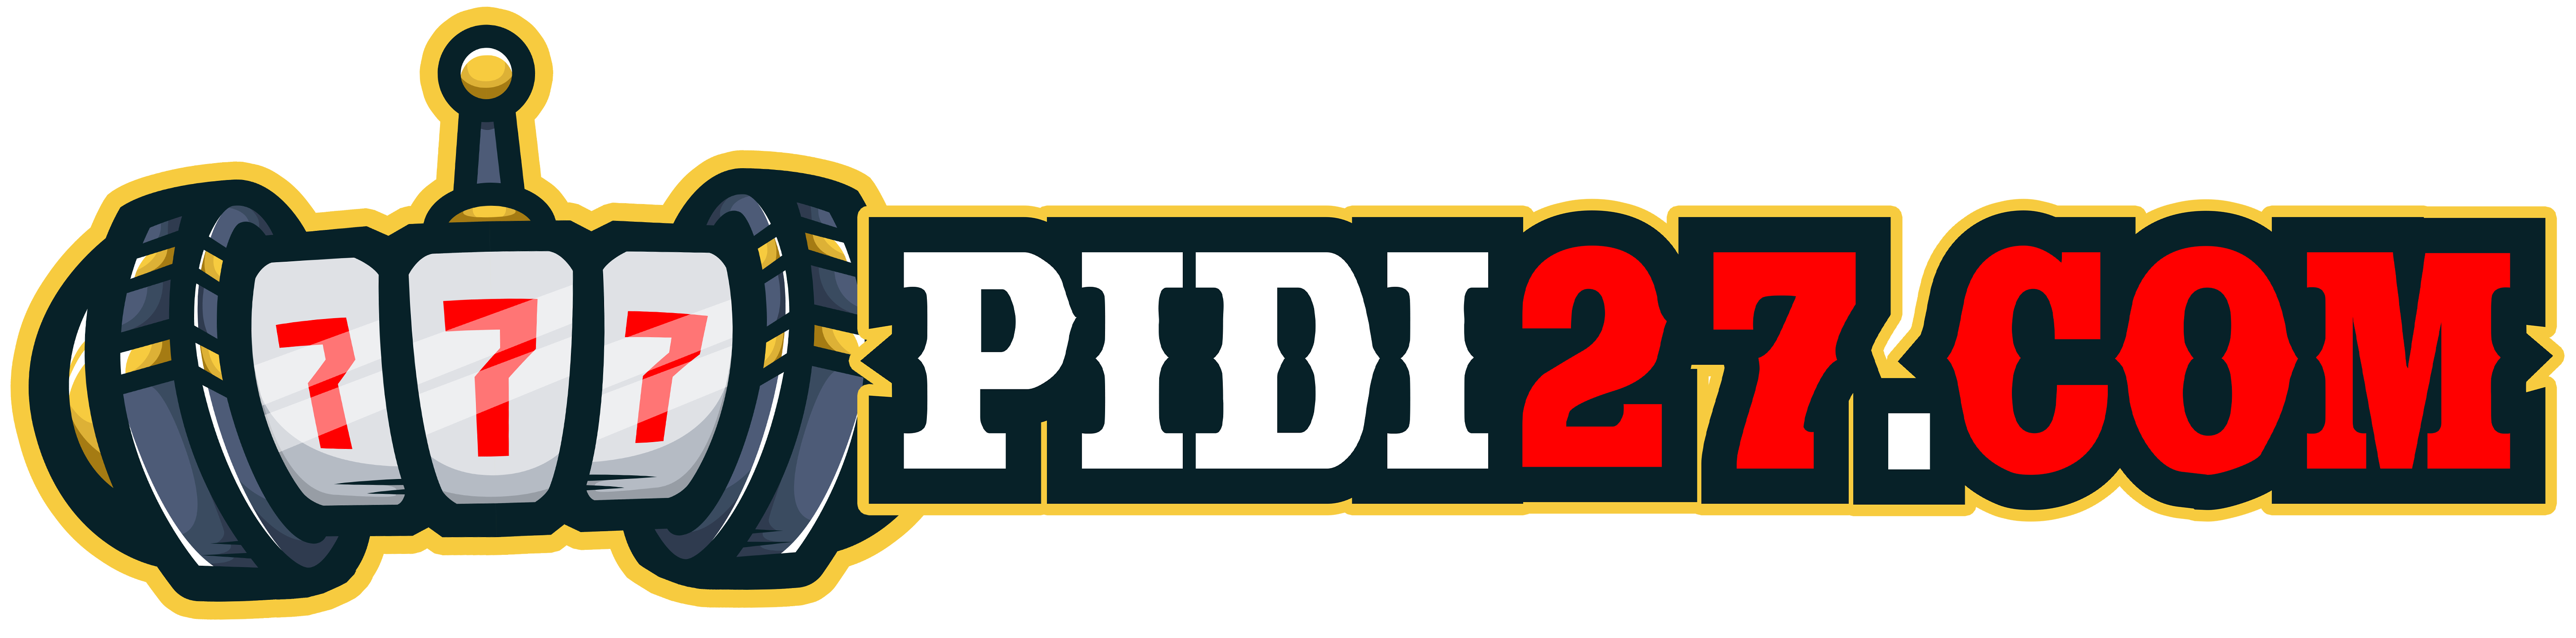 Entry Pidi27